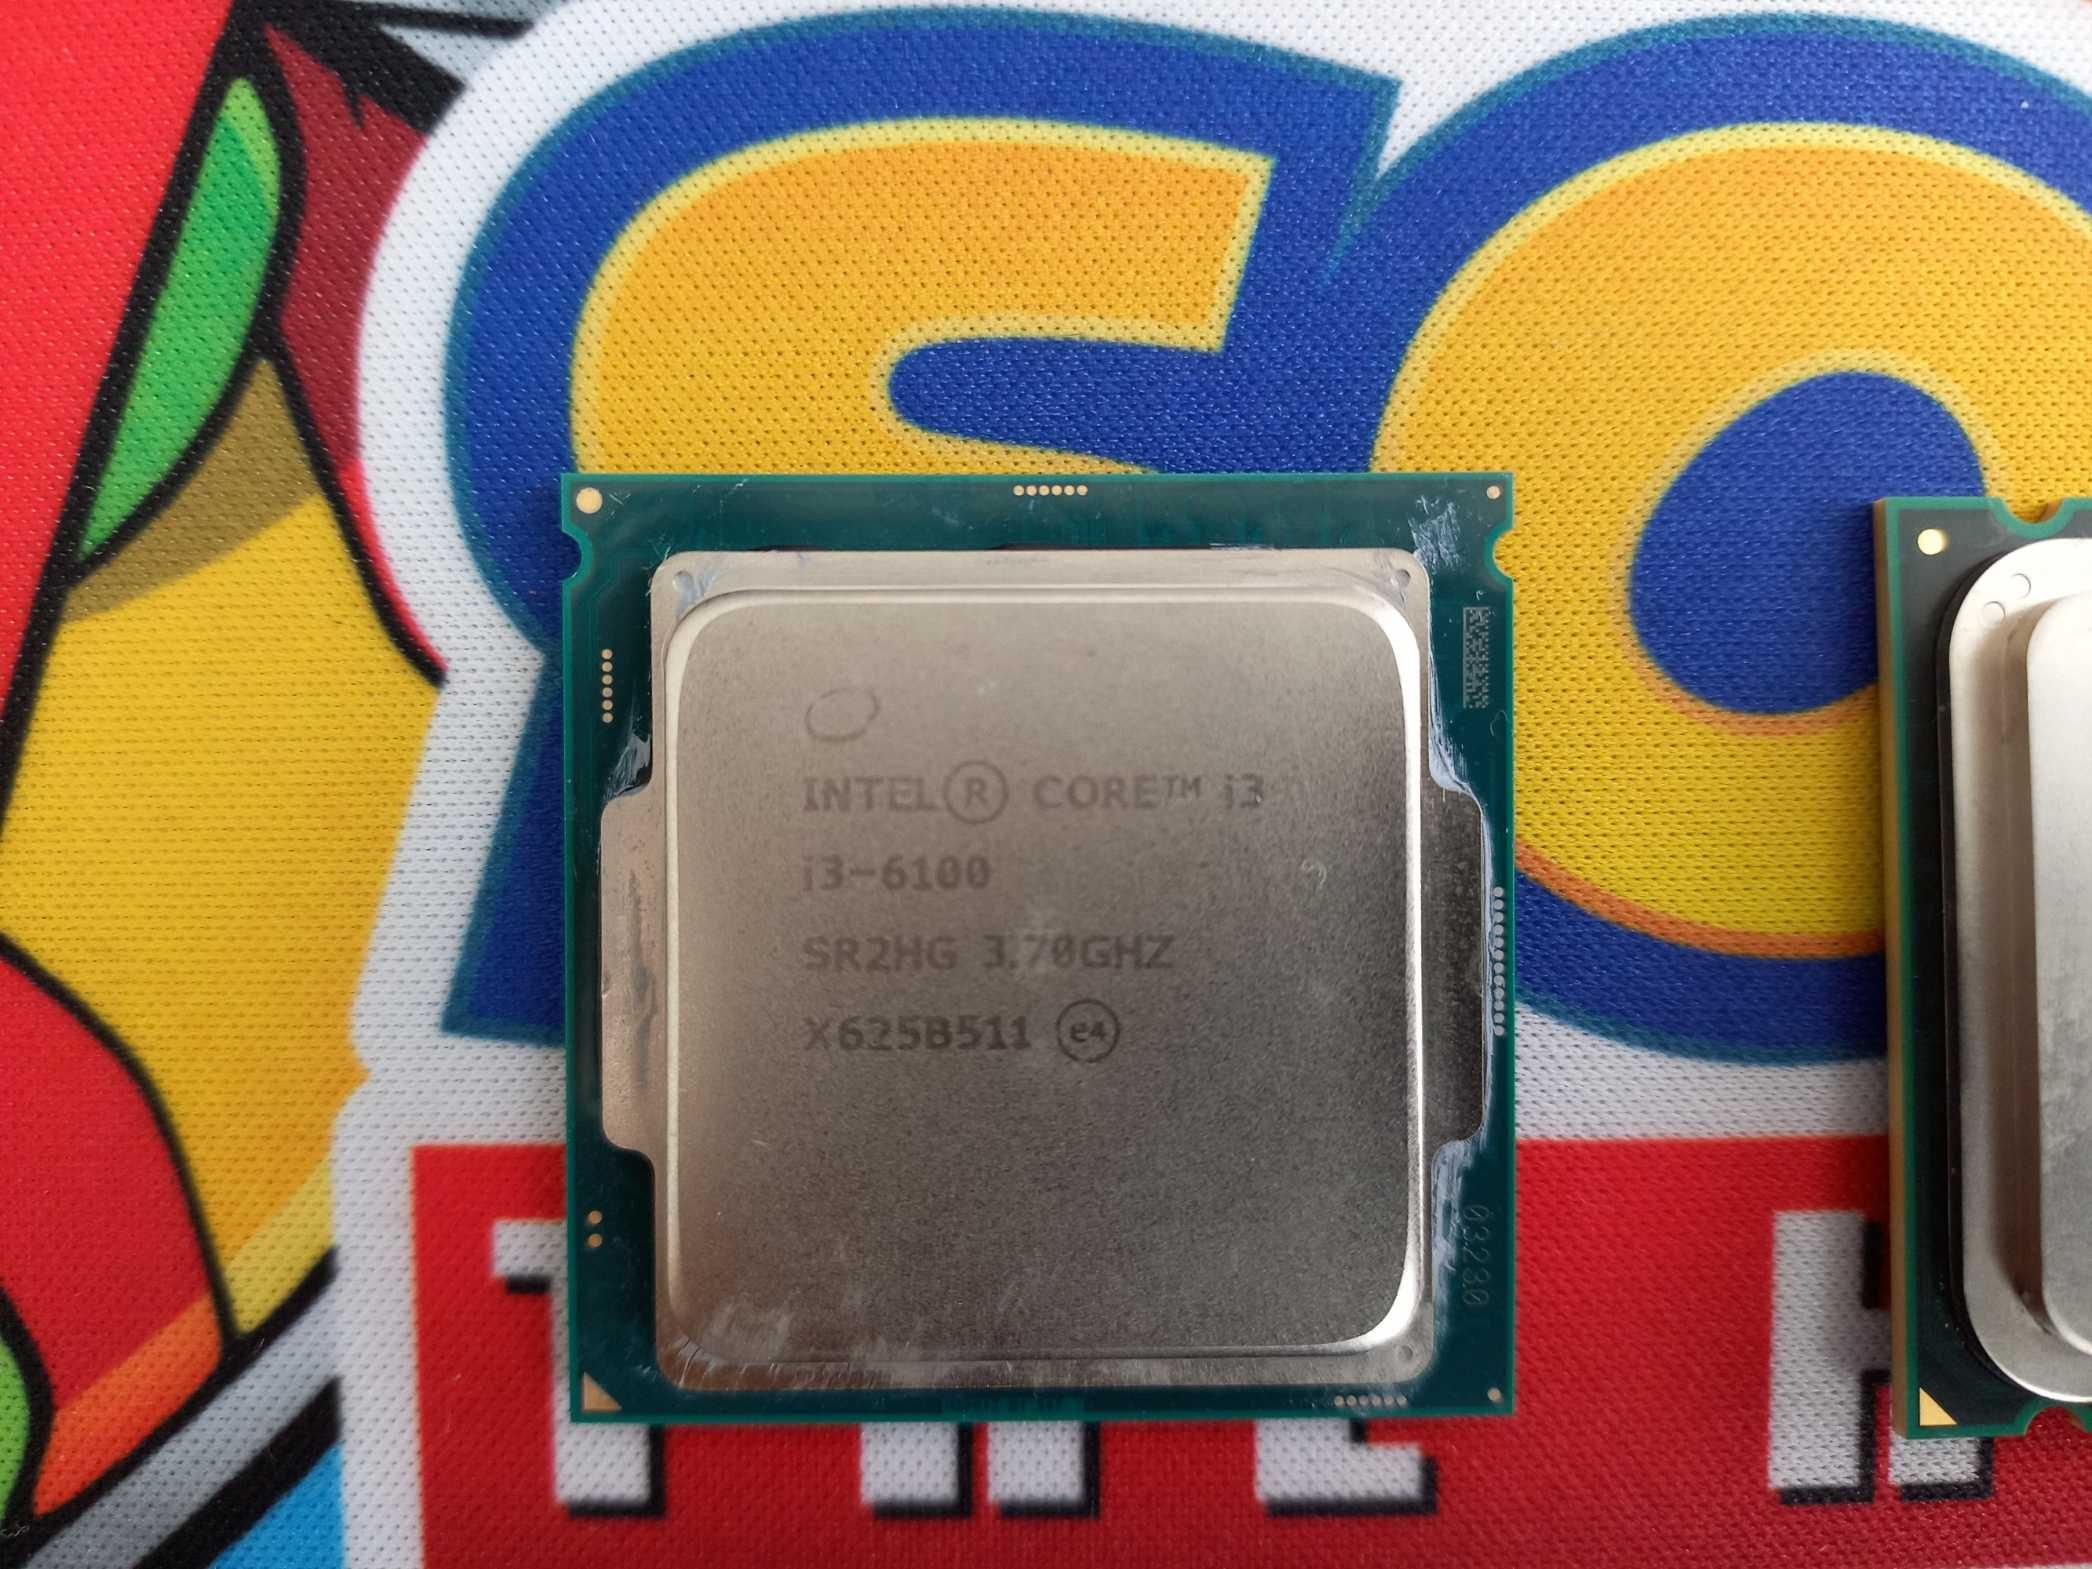 cpu Xeon E5-2620 V3 + i3-6100 + Pentium E5200